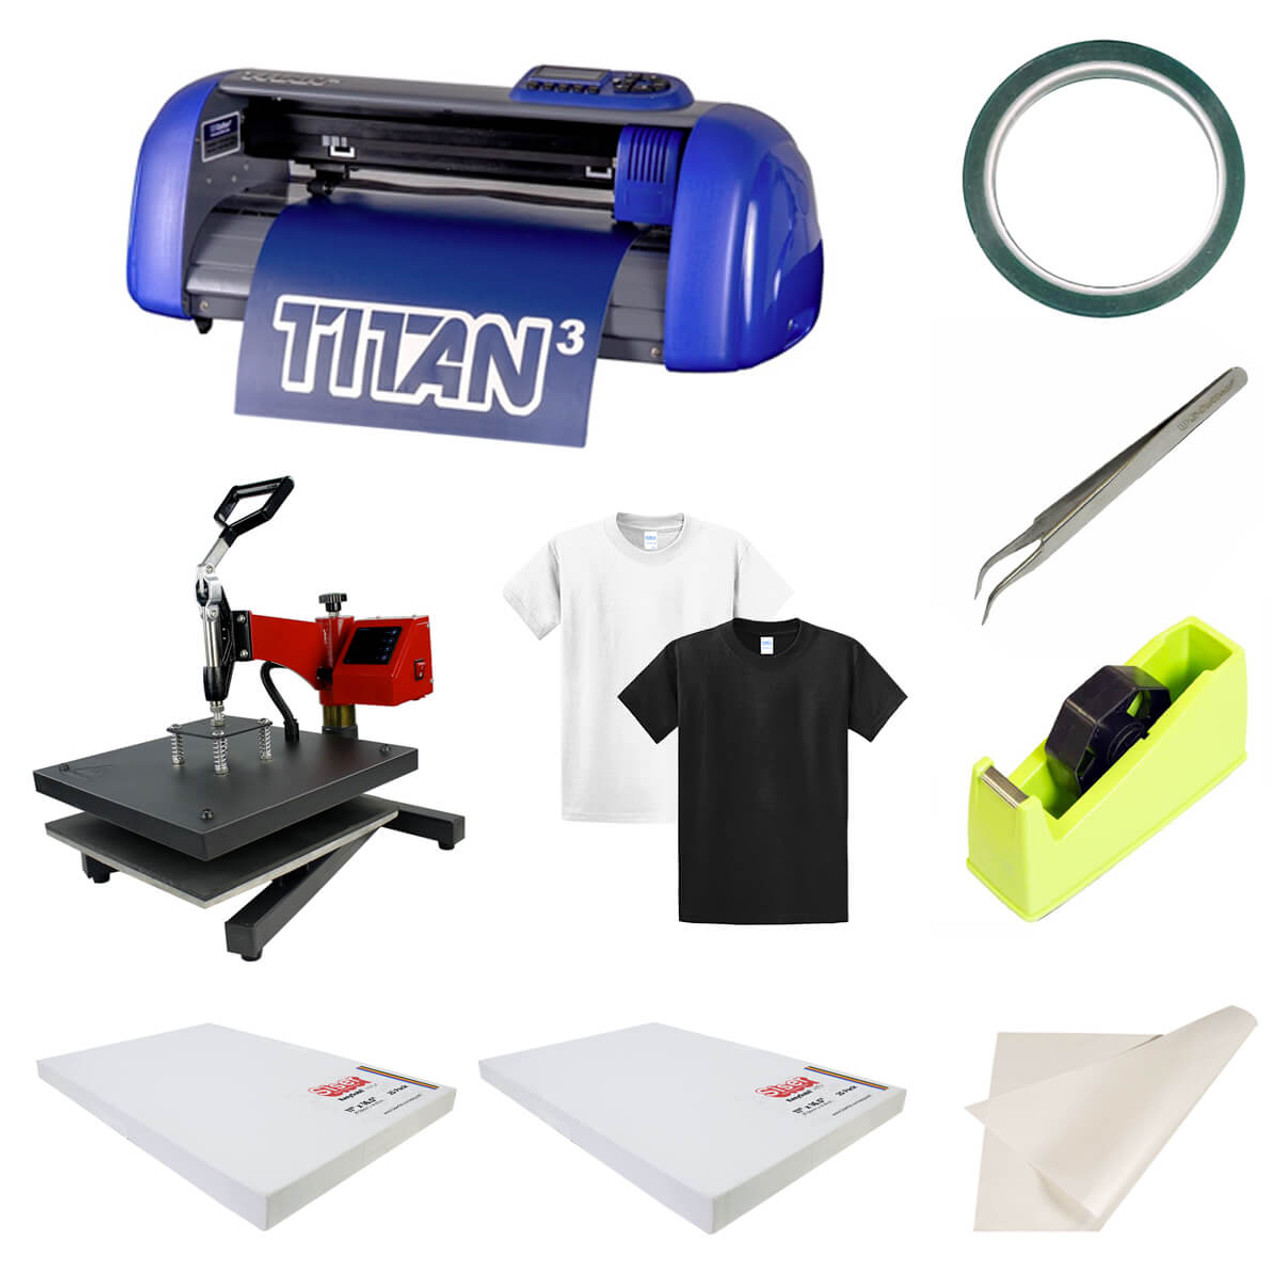 SISER EasySubli Sublimation Vinyl Cutter + Heat Press and Supplies Combo Kit